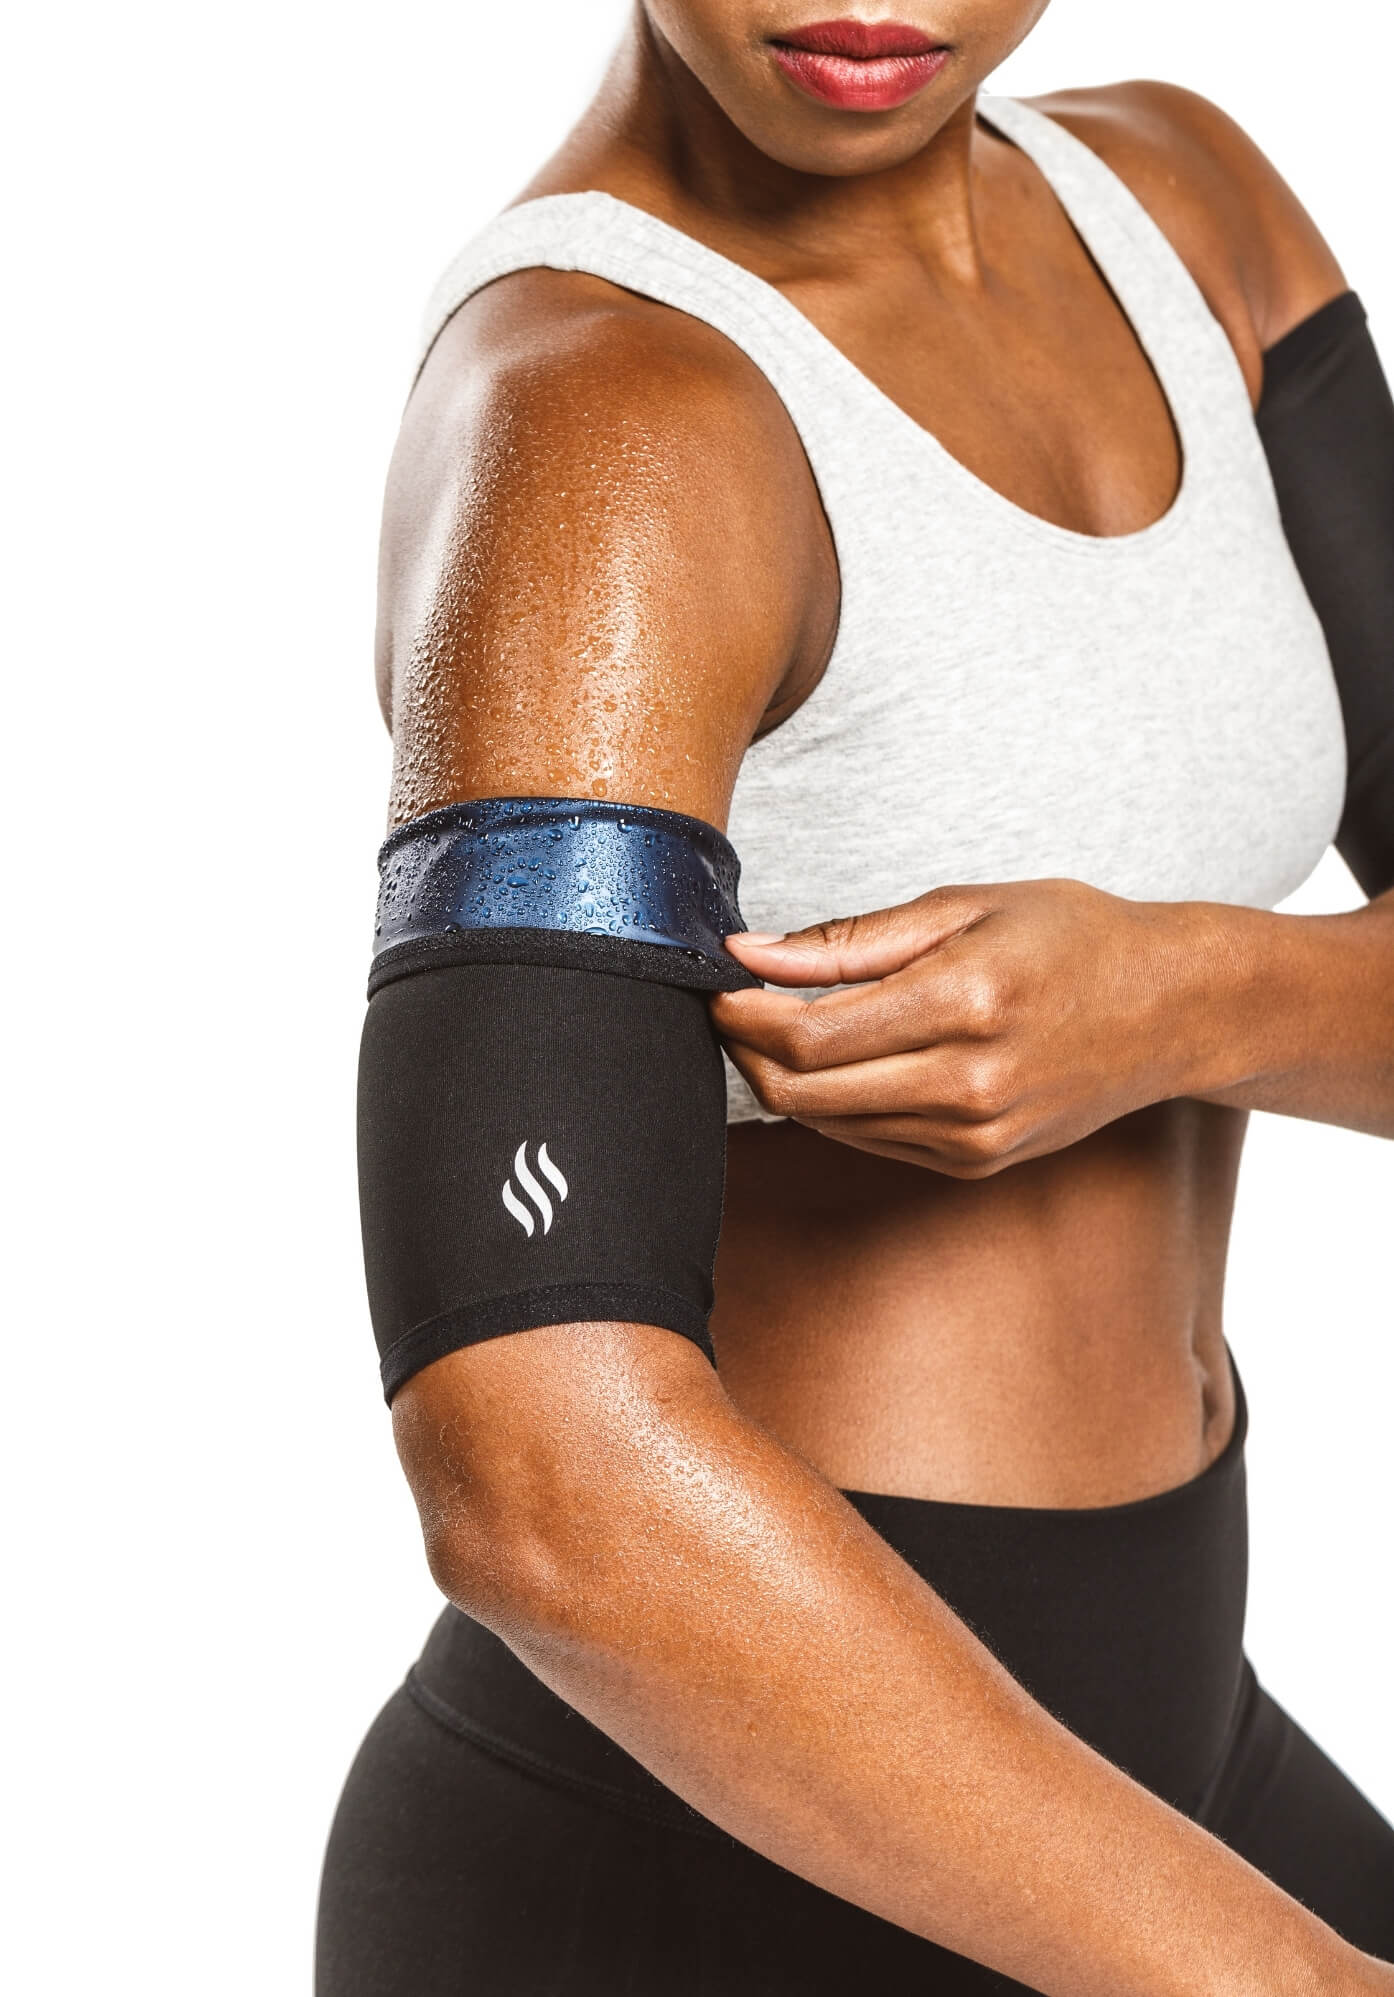  Body Maxx Arm Arm Sweat Bands For Women - Arm Spanx